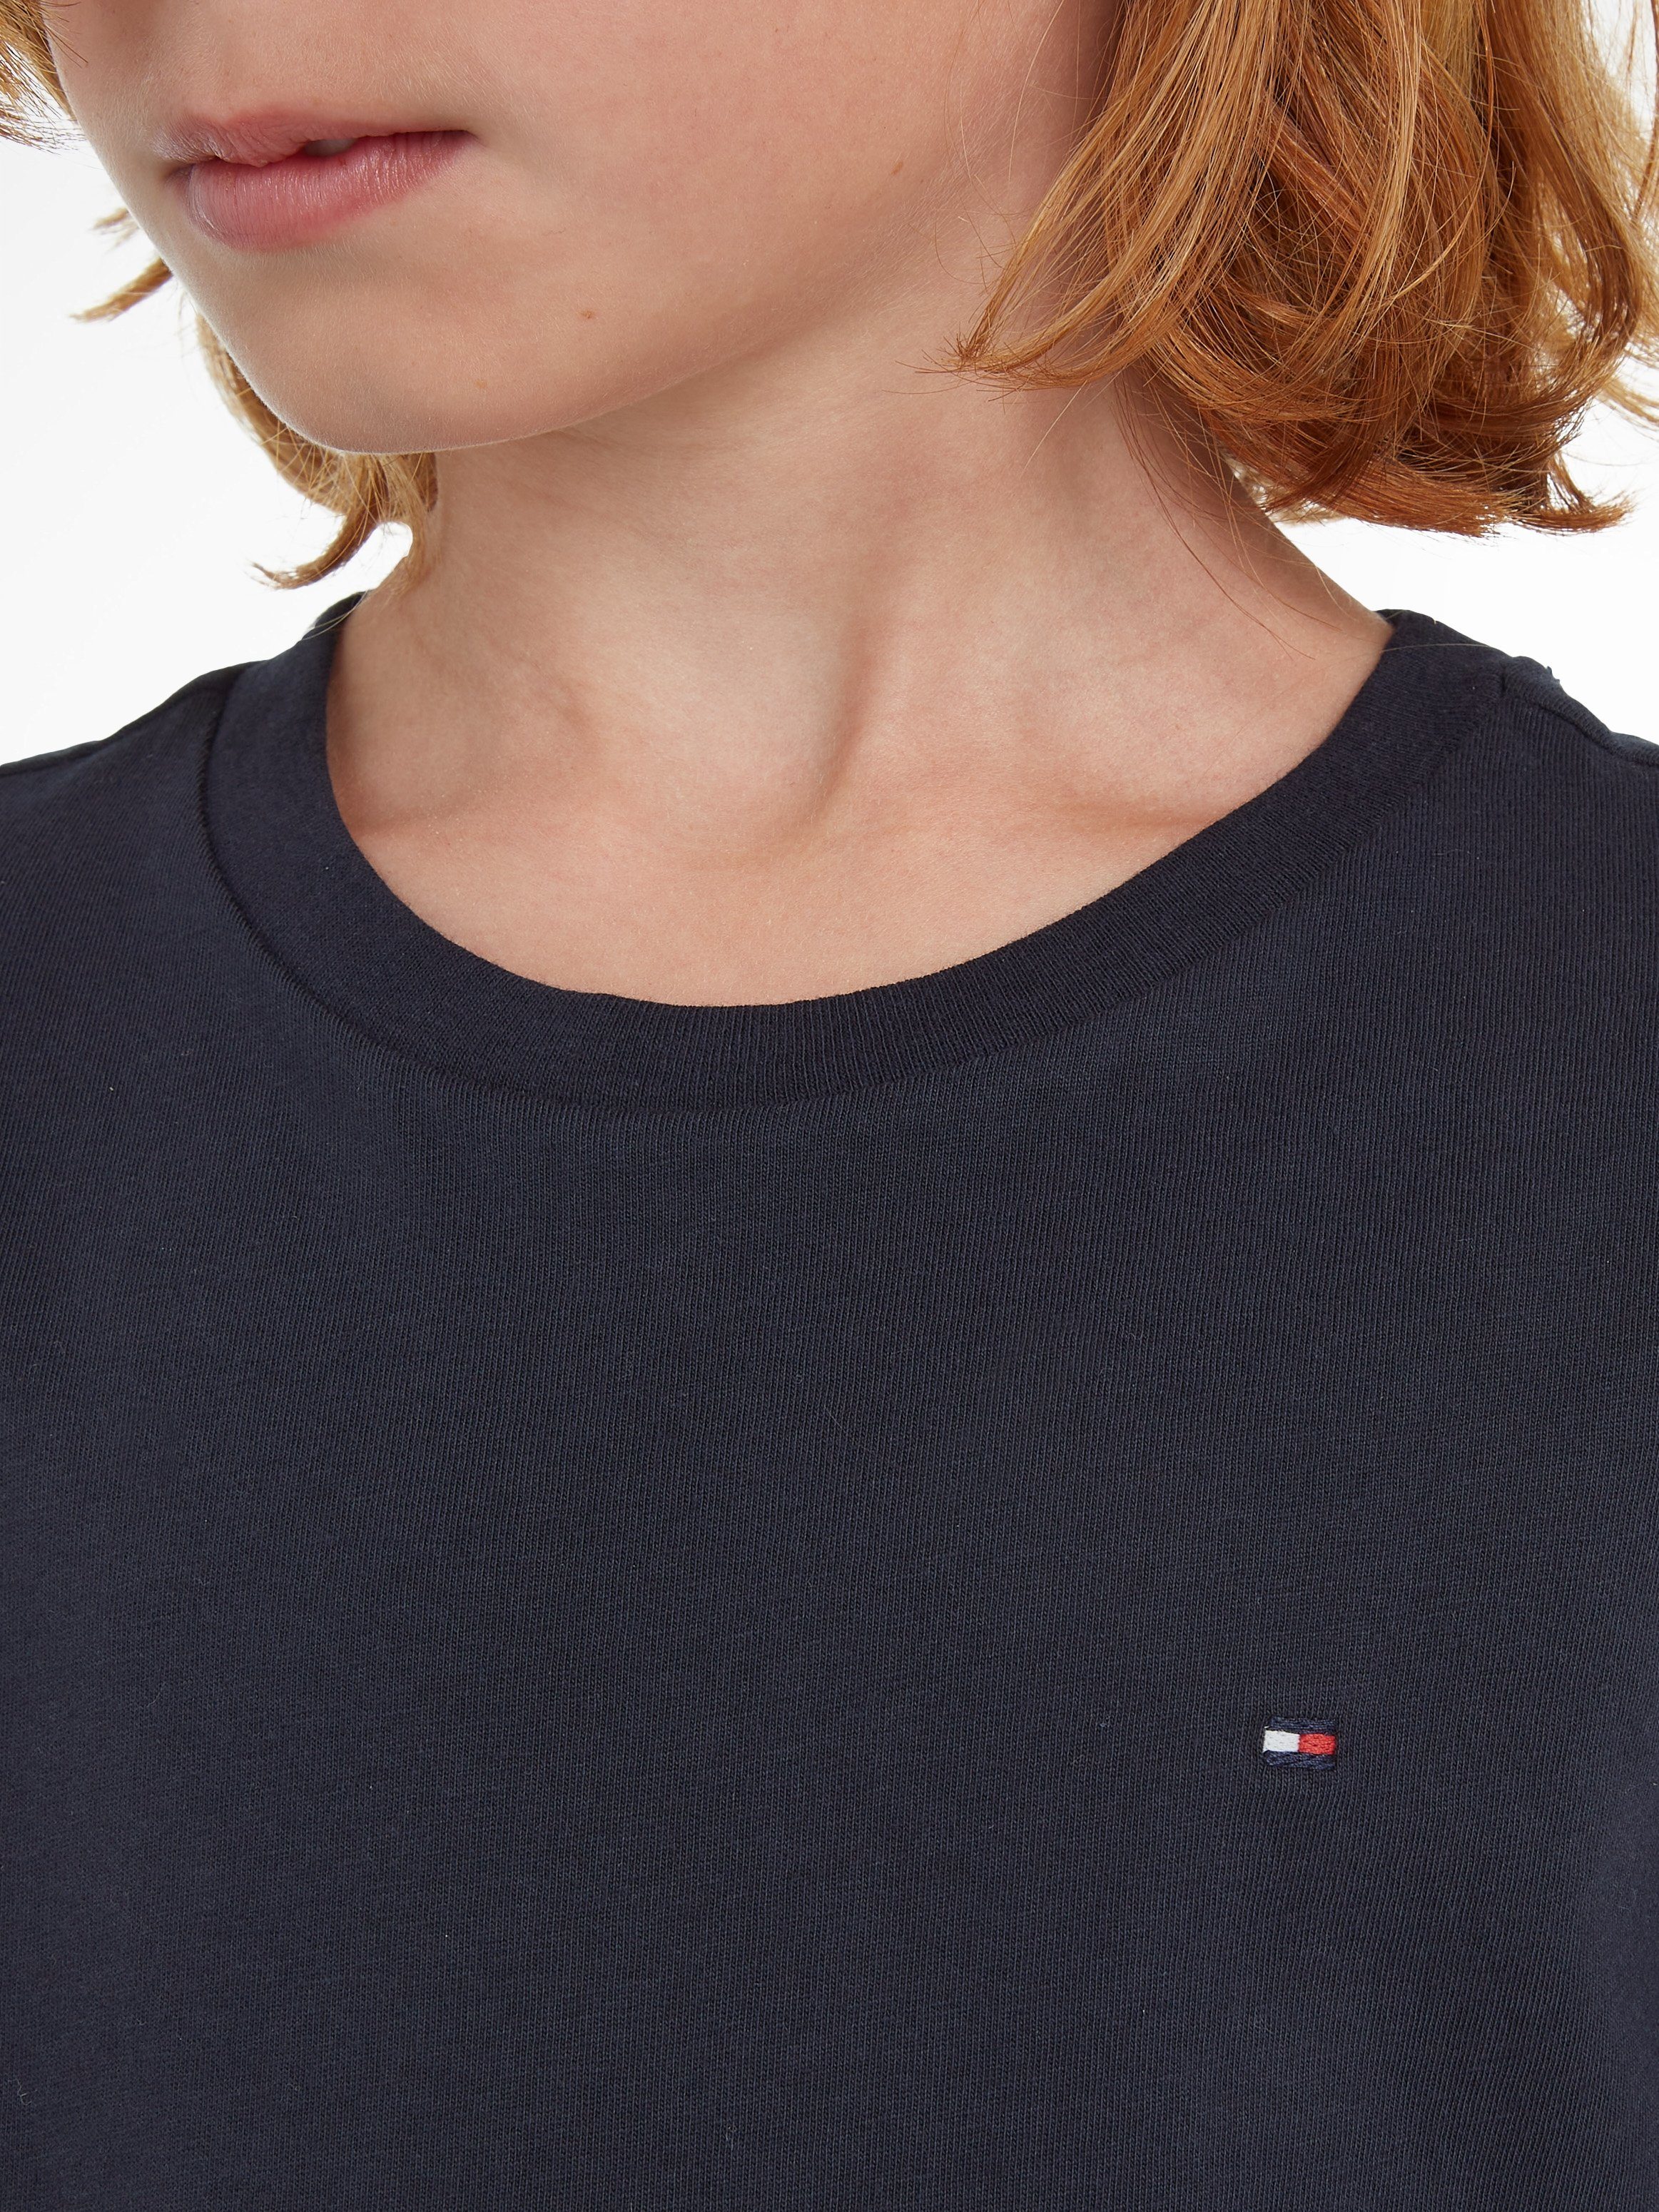 MiniMe,für Kids KNIT Jungen CN Hilfiger BOYS T-Shirt Junior Tommy BASIC Kinder